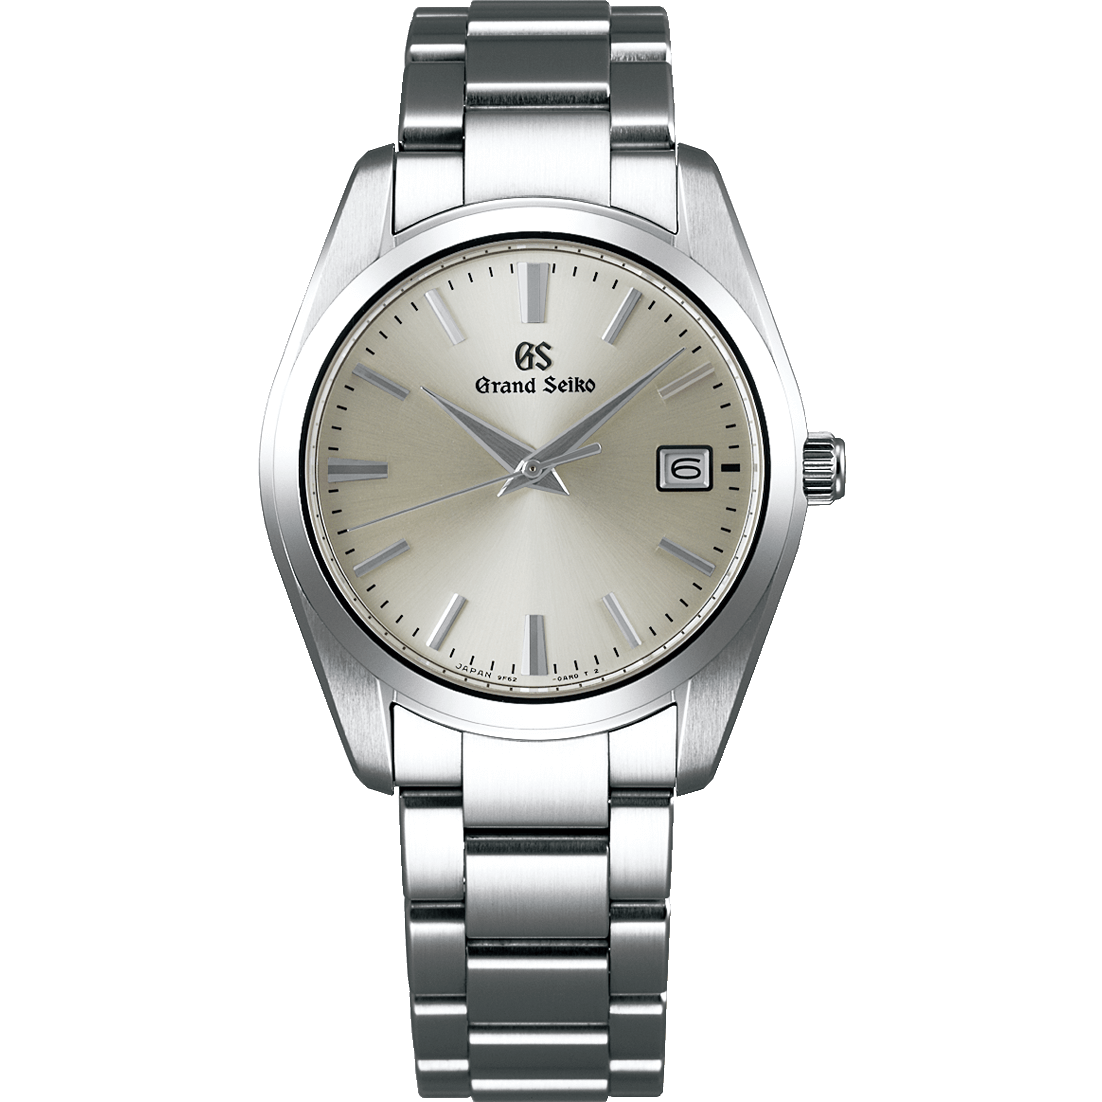 Grand Seiko SBGX263, 9F62 Quartz, champagne dial, stainless steel, men's watches